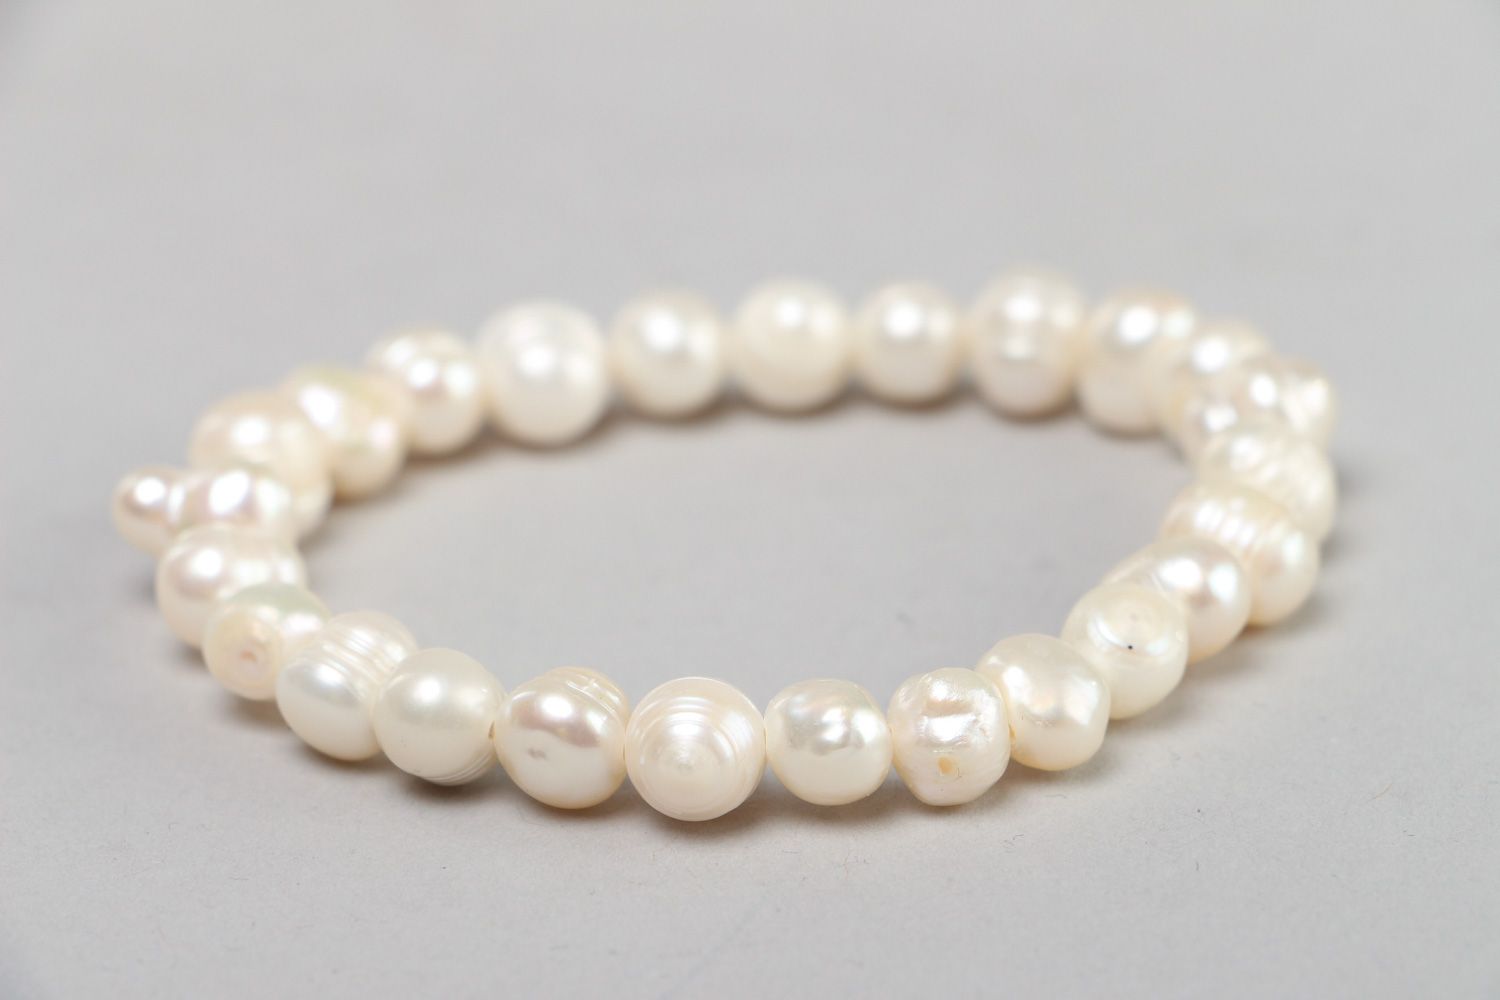 Stylish handmade stretch wrist bracelet with white fresh water pearls for women photo 2